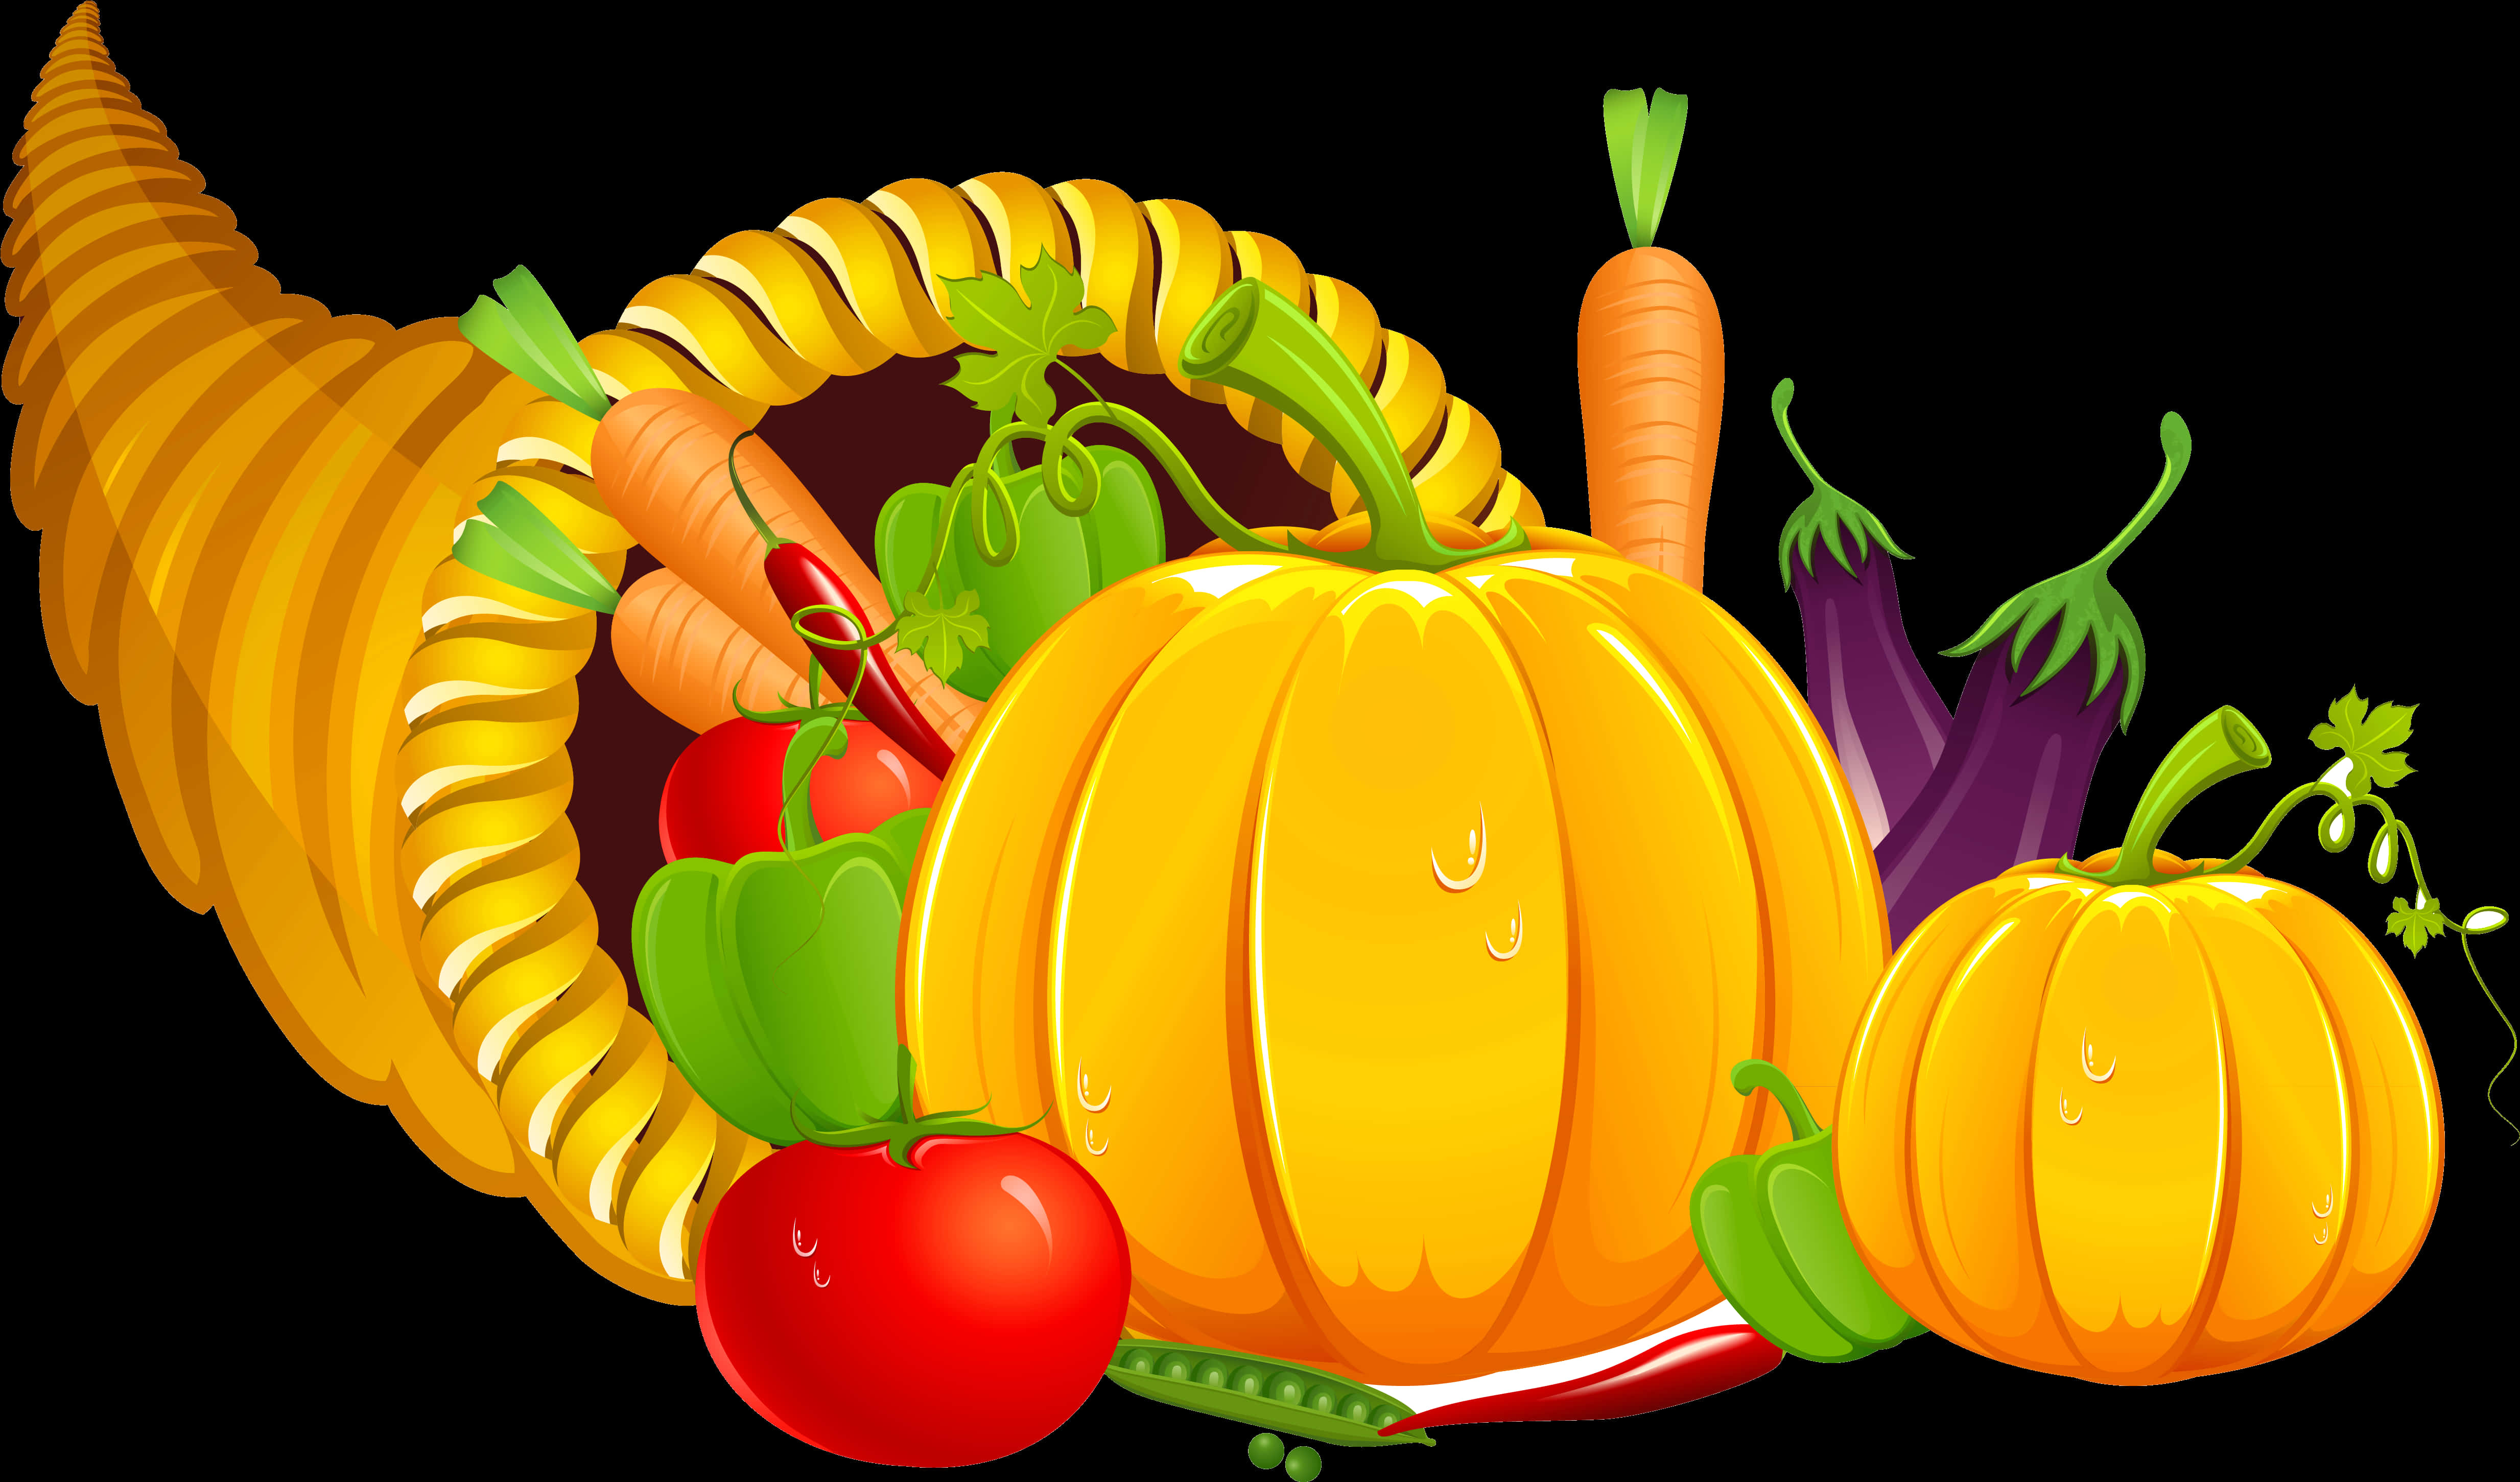 Thanksgiving Produce Artwork